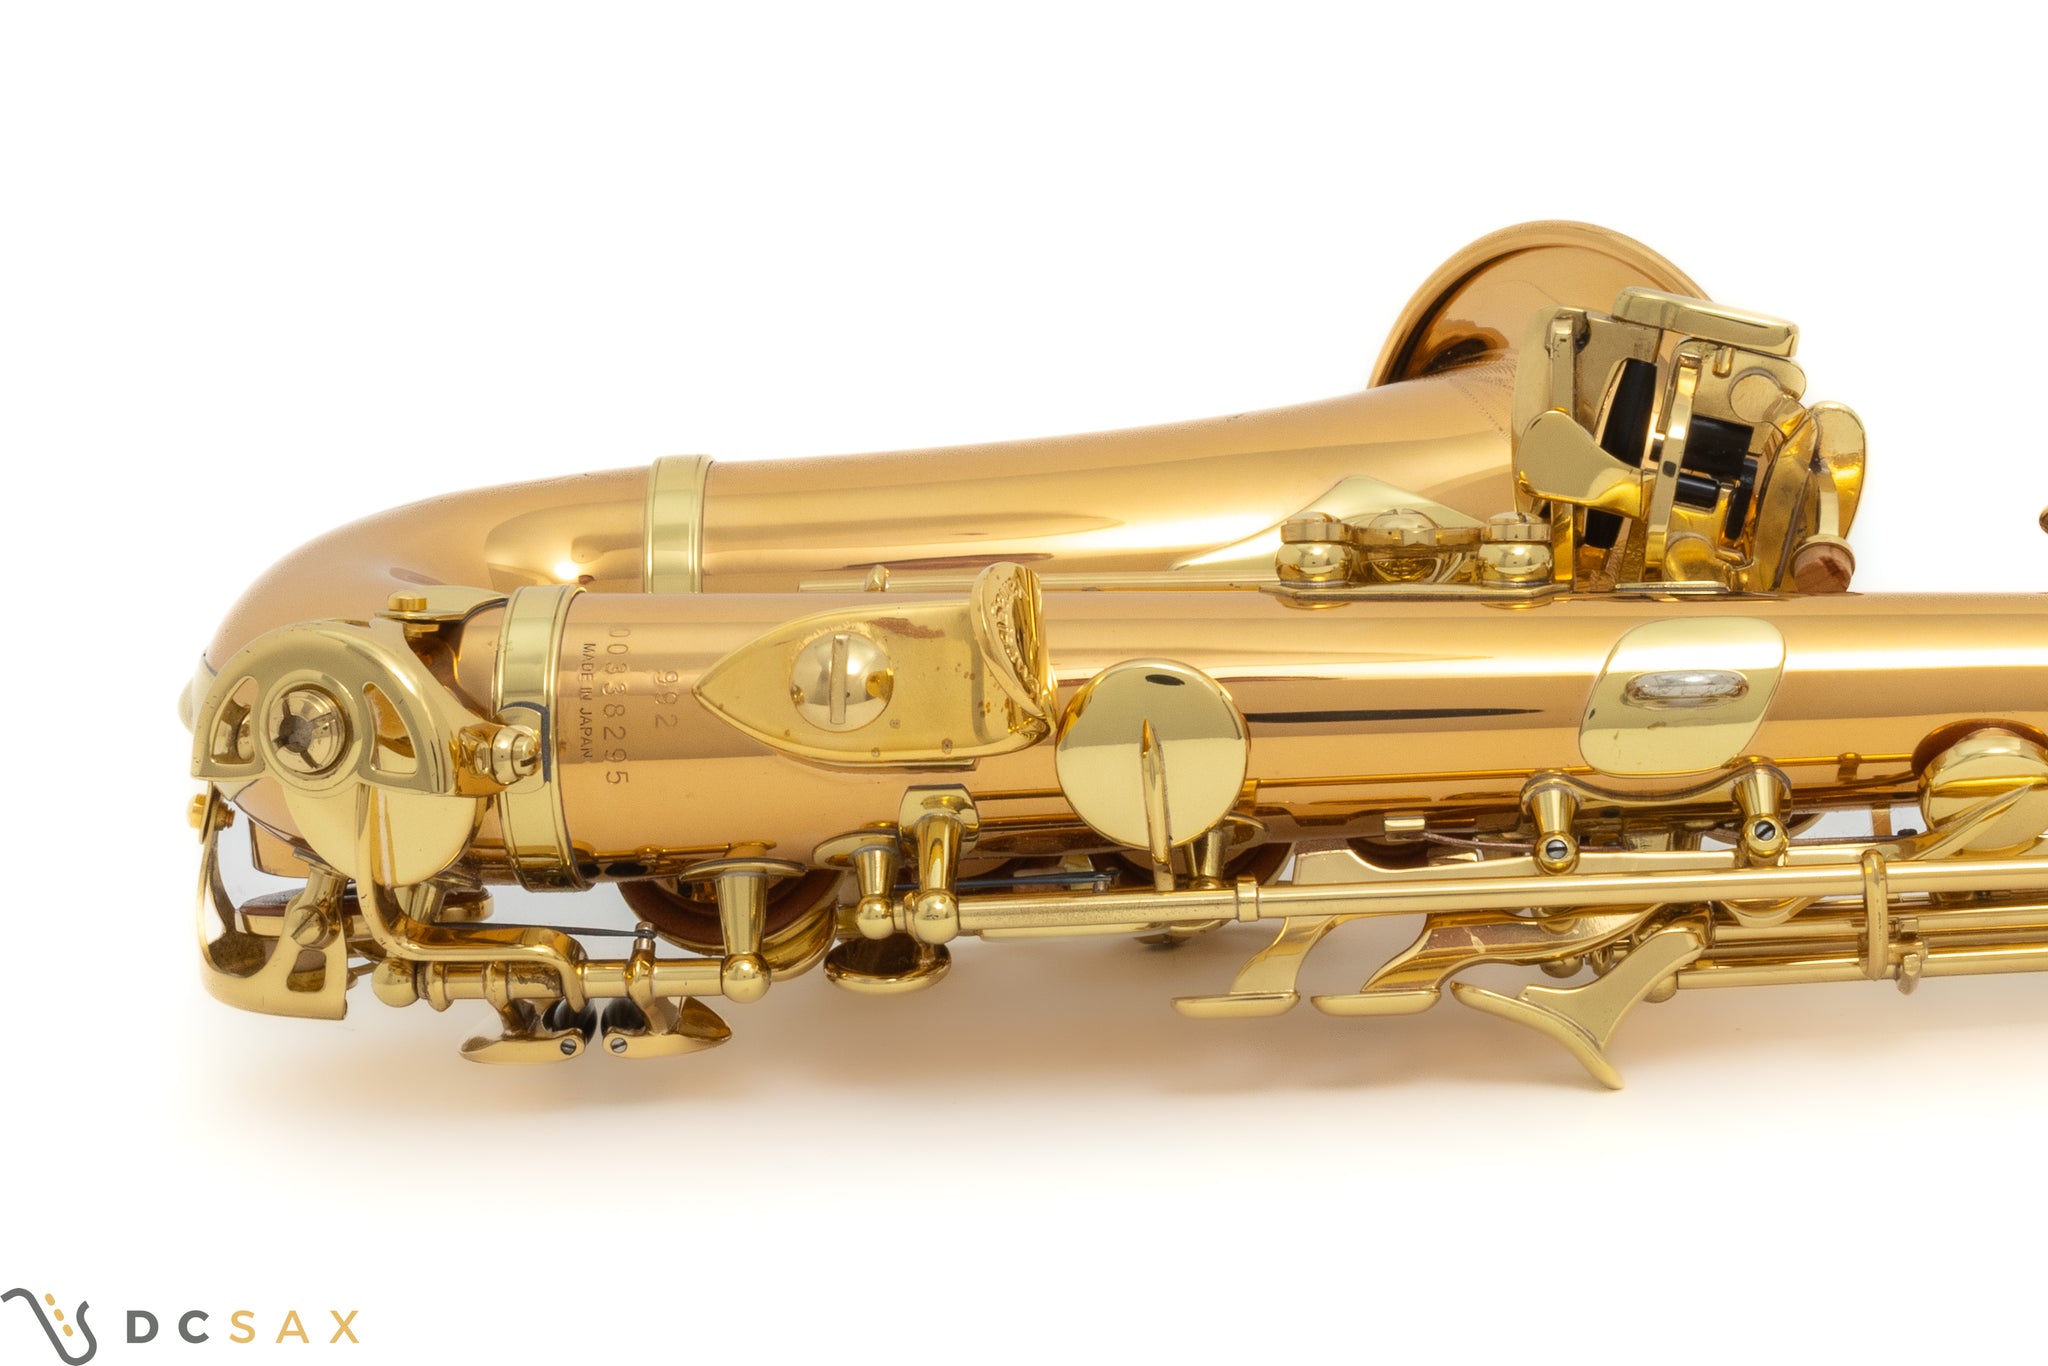 Yanagisawa SC-992 Soprano Saxophone, Near Mint